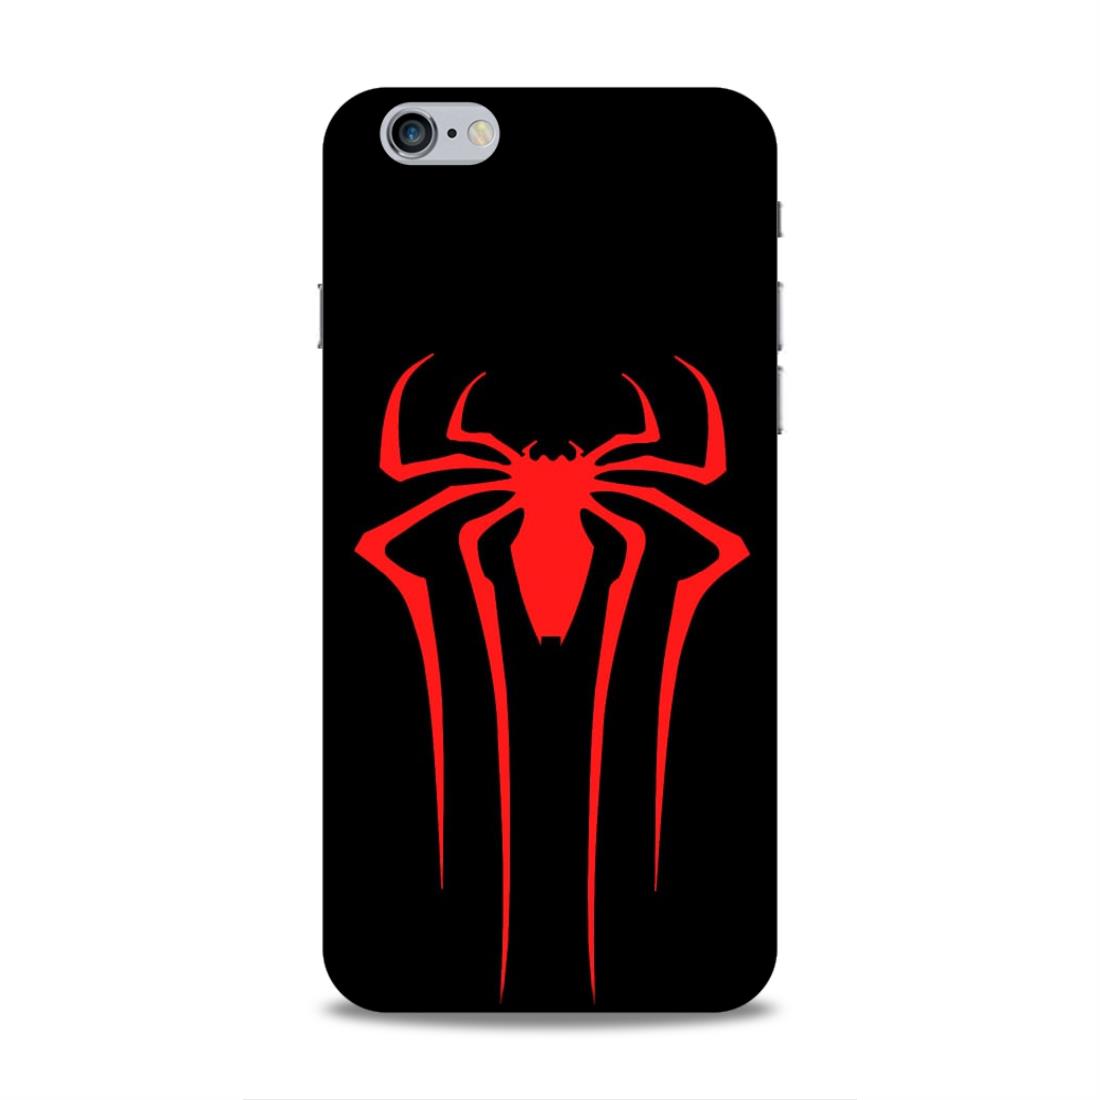 Spiderman Symbol Hard Back Case For Apple iPhone 6 Plus / 6s Plus